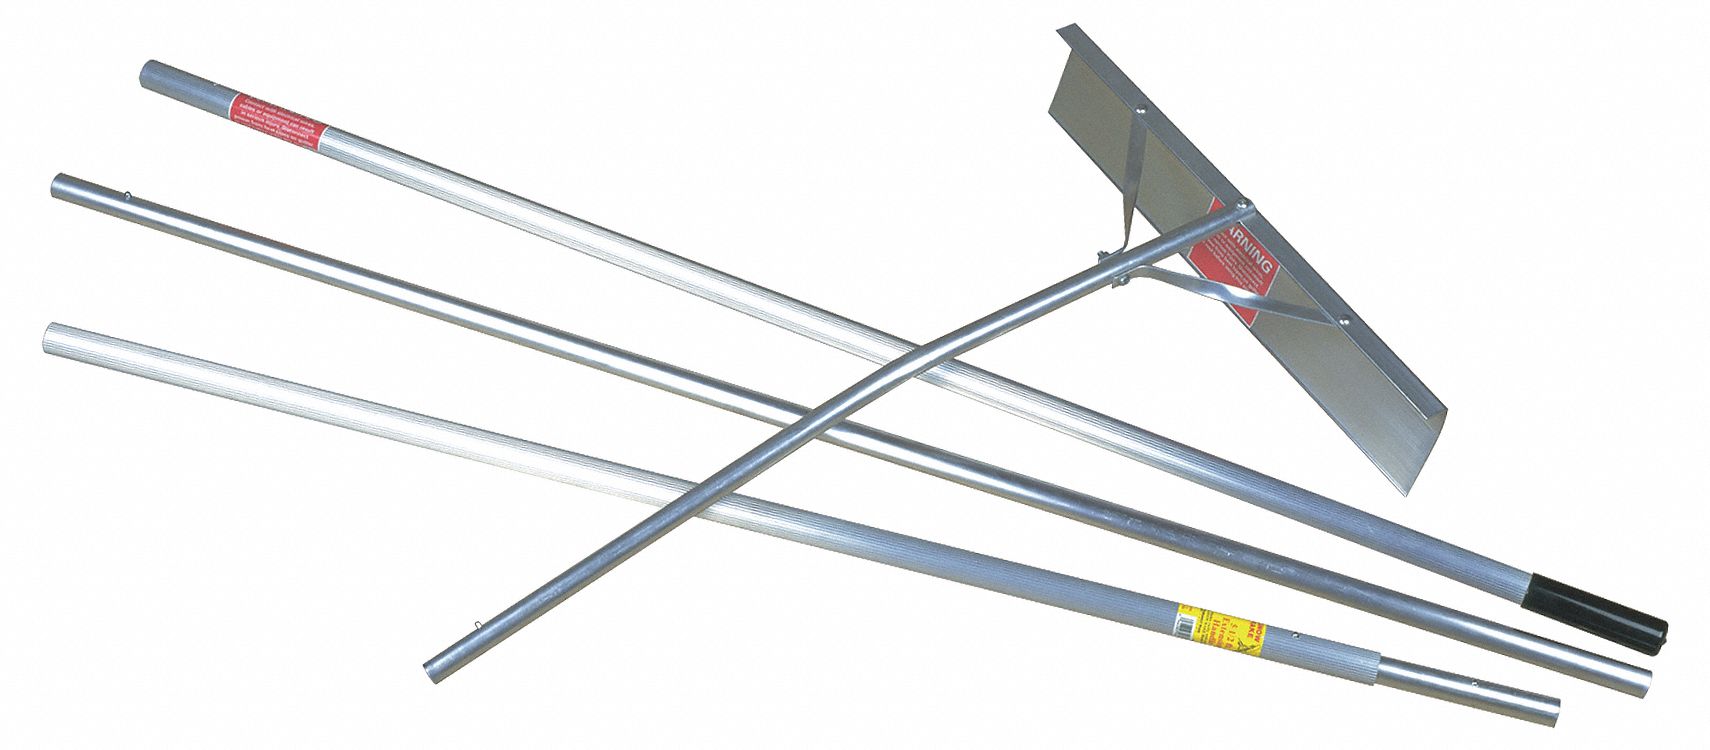 Snow Roof Rake Scraper: 24 in Blade Wd, Aluminum, Telescoping, 16 ft Handle Lg